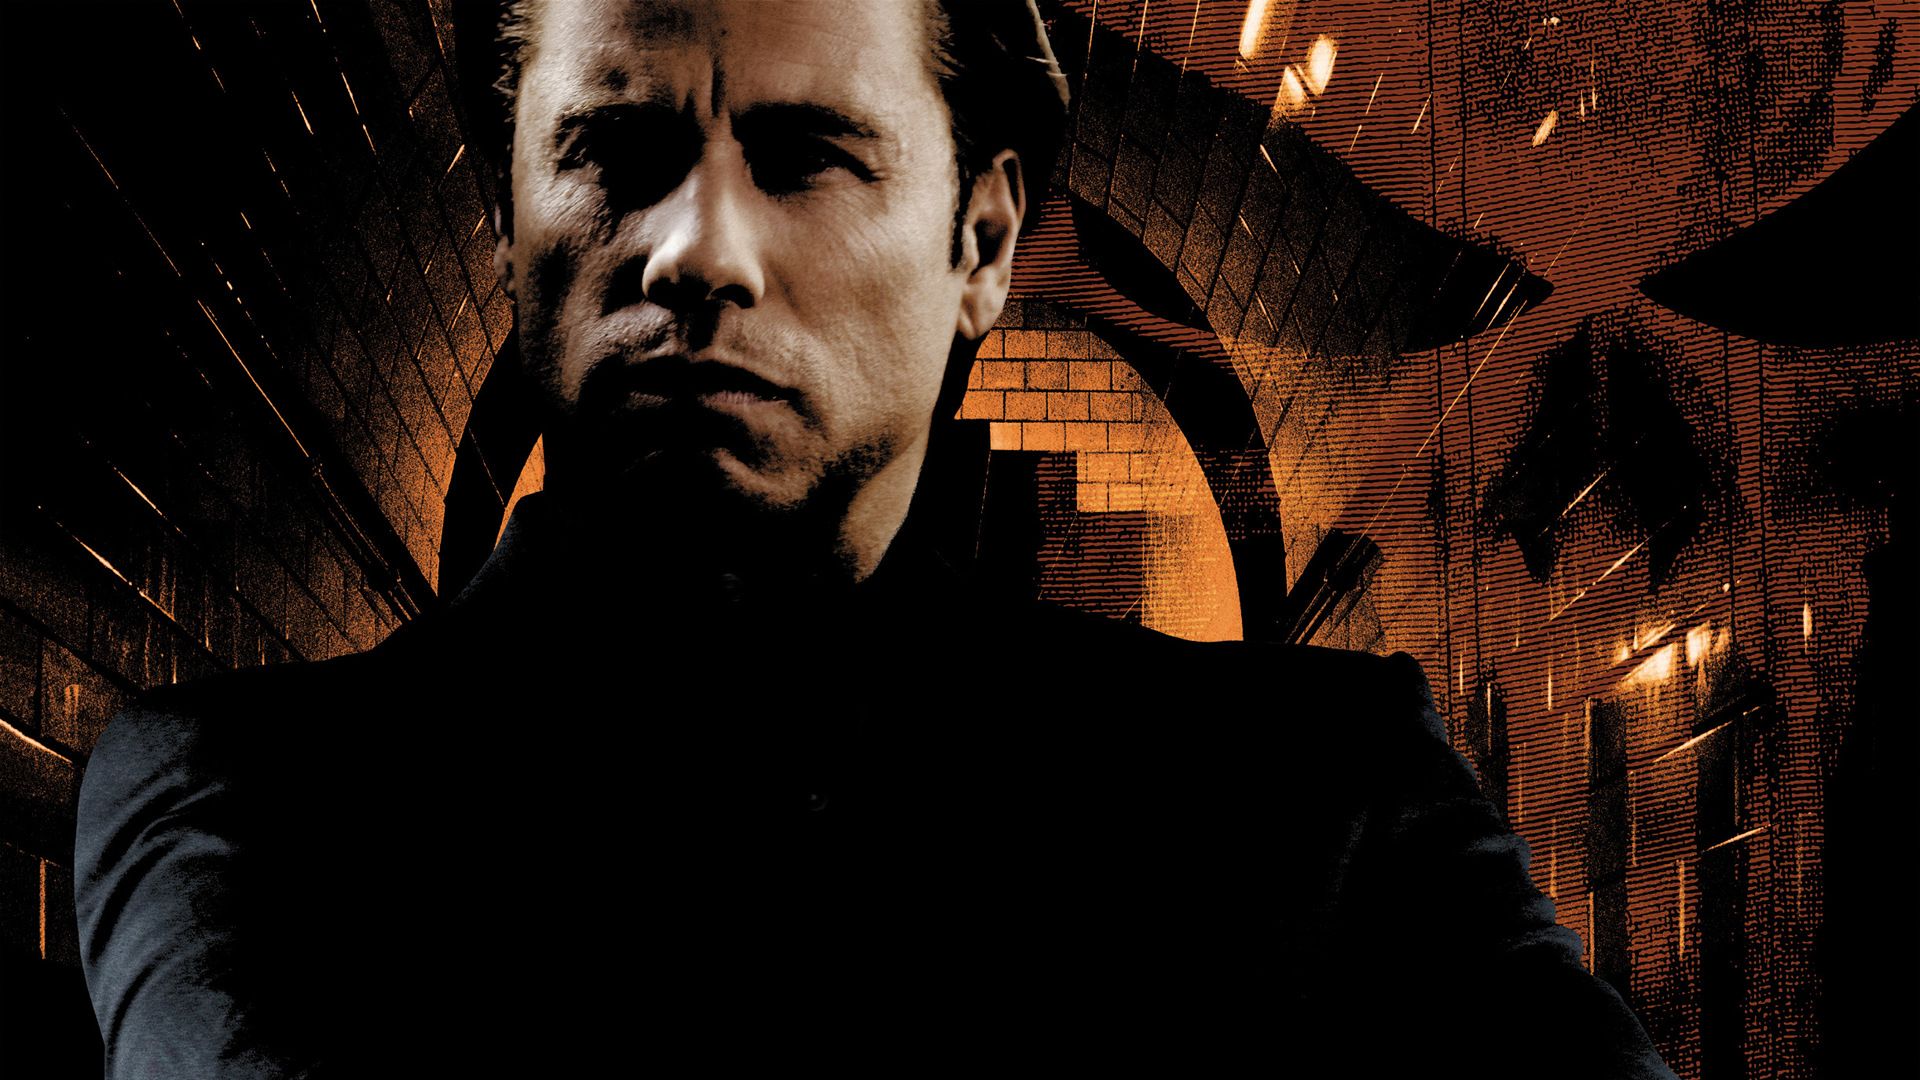 Movie The Punisher 2004 Wallpaper:1920x1080